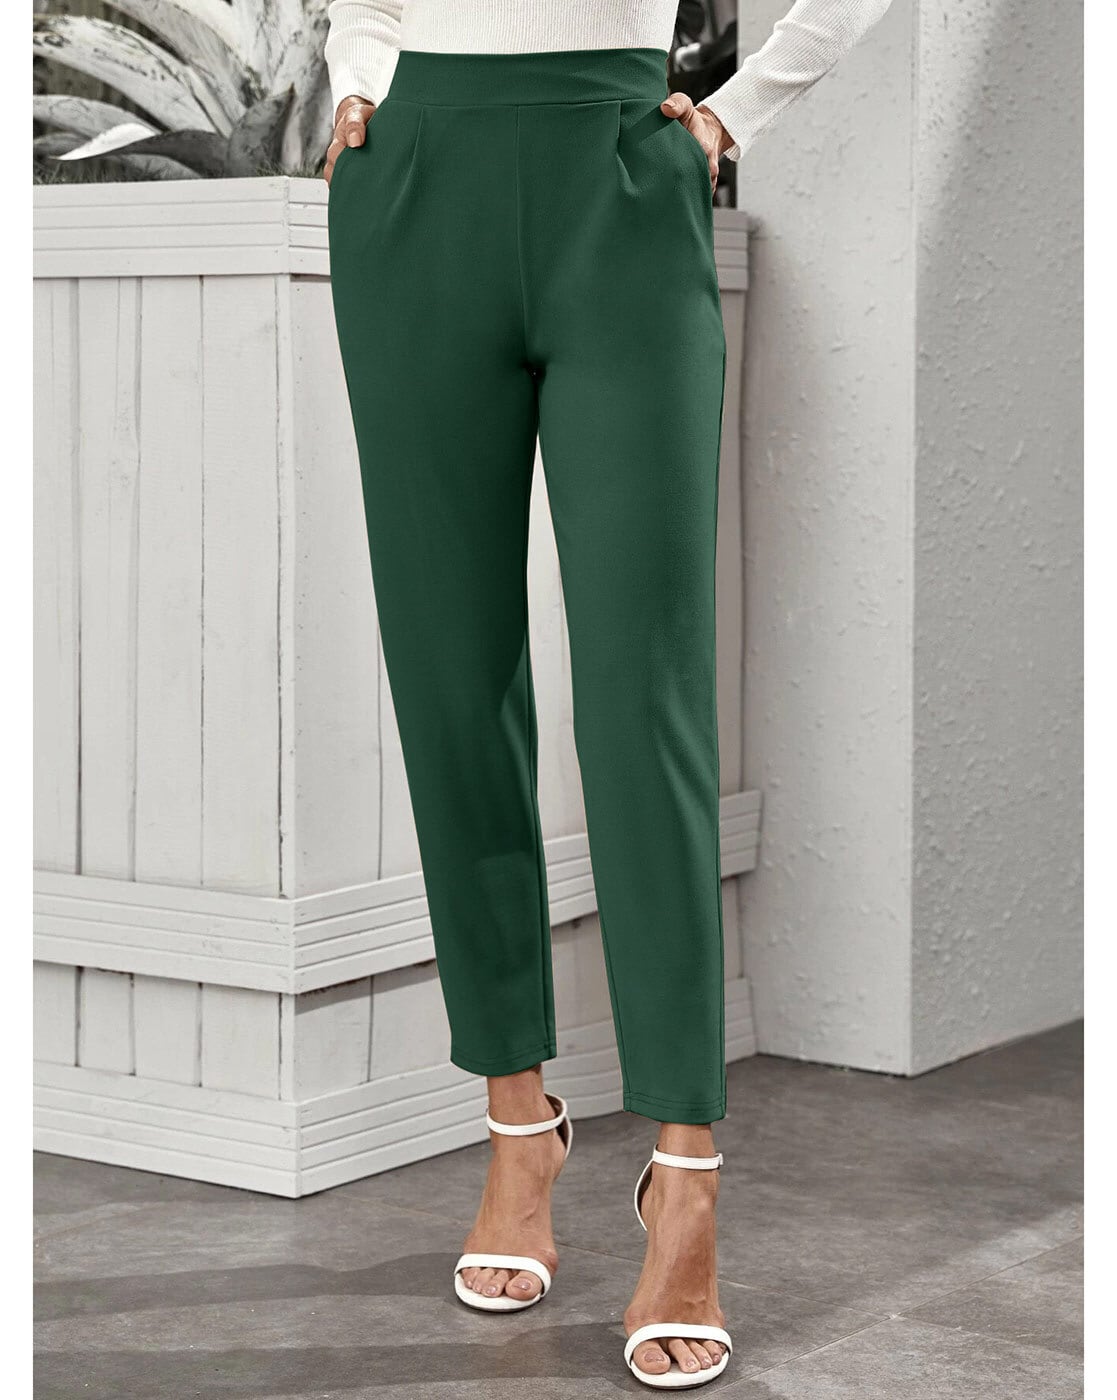 Capreze Dress Pants for Women High Waist Office Work Pant with Pockets  Casual Straight Leg Slacks Business Trousers Dark Green M - Walmart.com